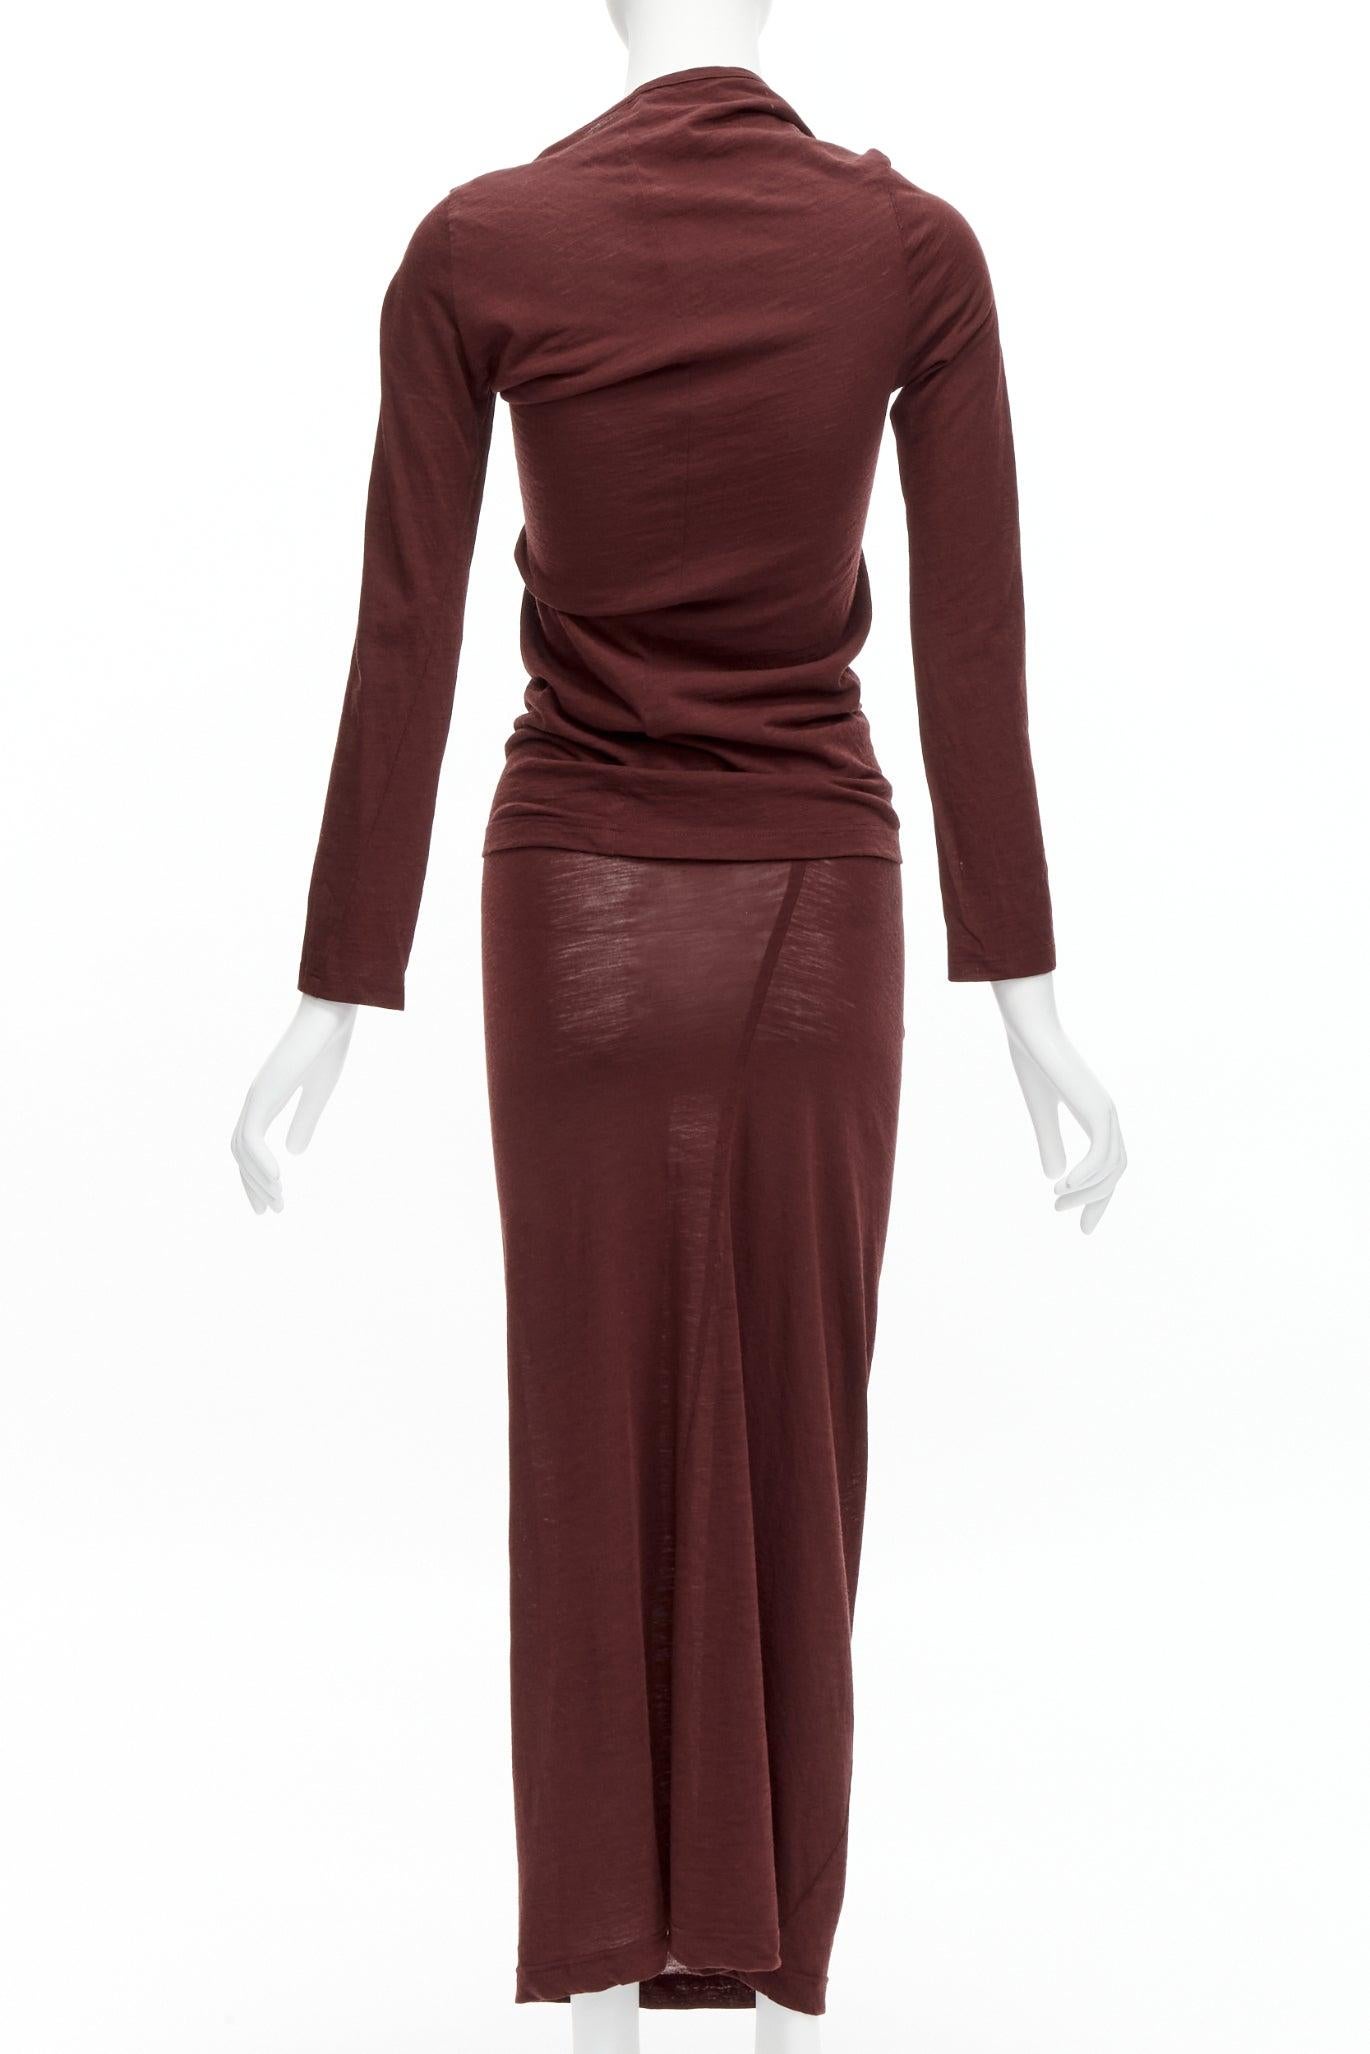 CDG COMME DES GARCONS burgundy brown bias cut stretch top midi skirt set S For Sale 1